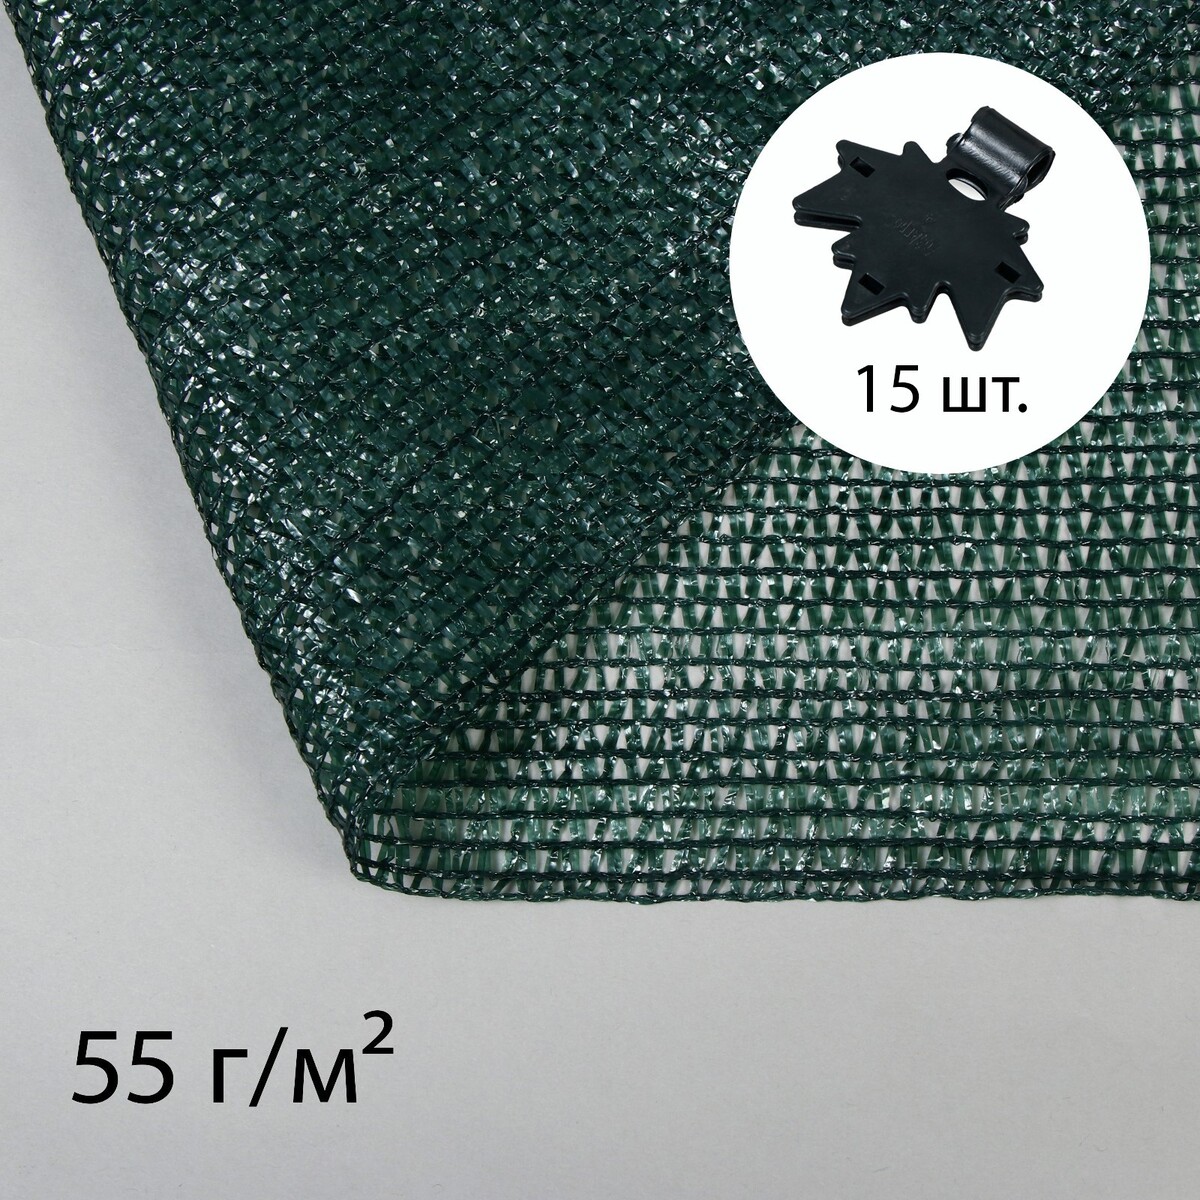 Сетка затеняющая, 5 × 2 м, плотность 55 г/м², зеленая, в наборе 15 клипс парник от птиц сетка 8 × 2 м затенение 50% 6 дуг из стеклопластика d 4 мм